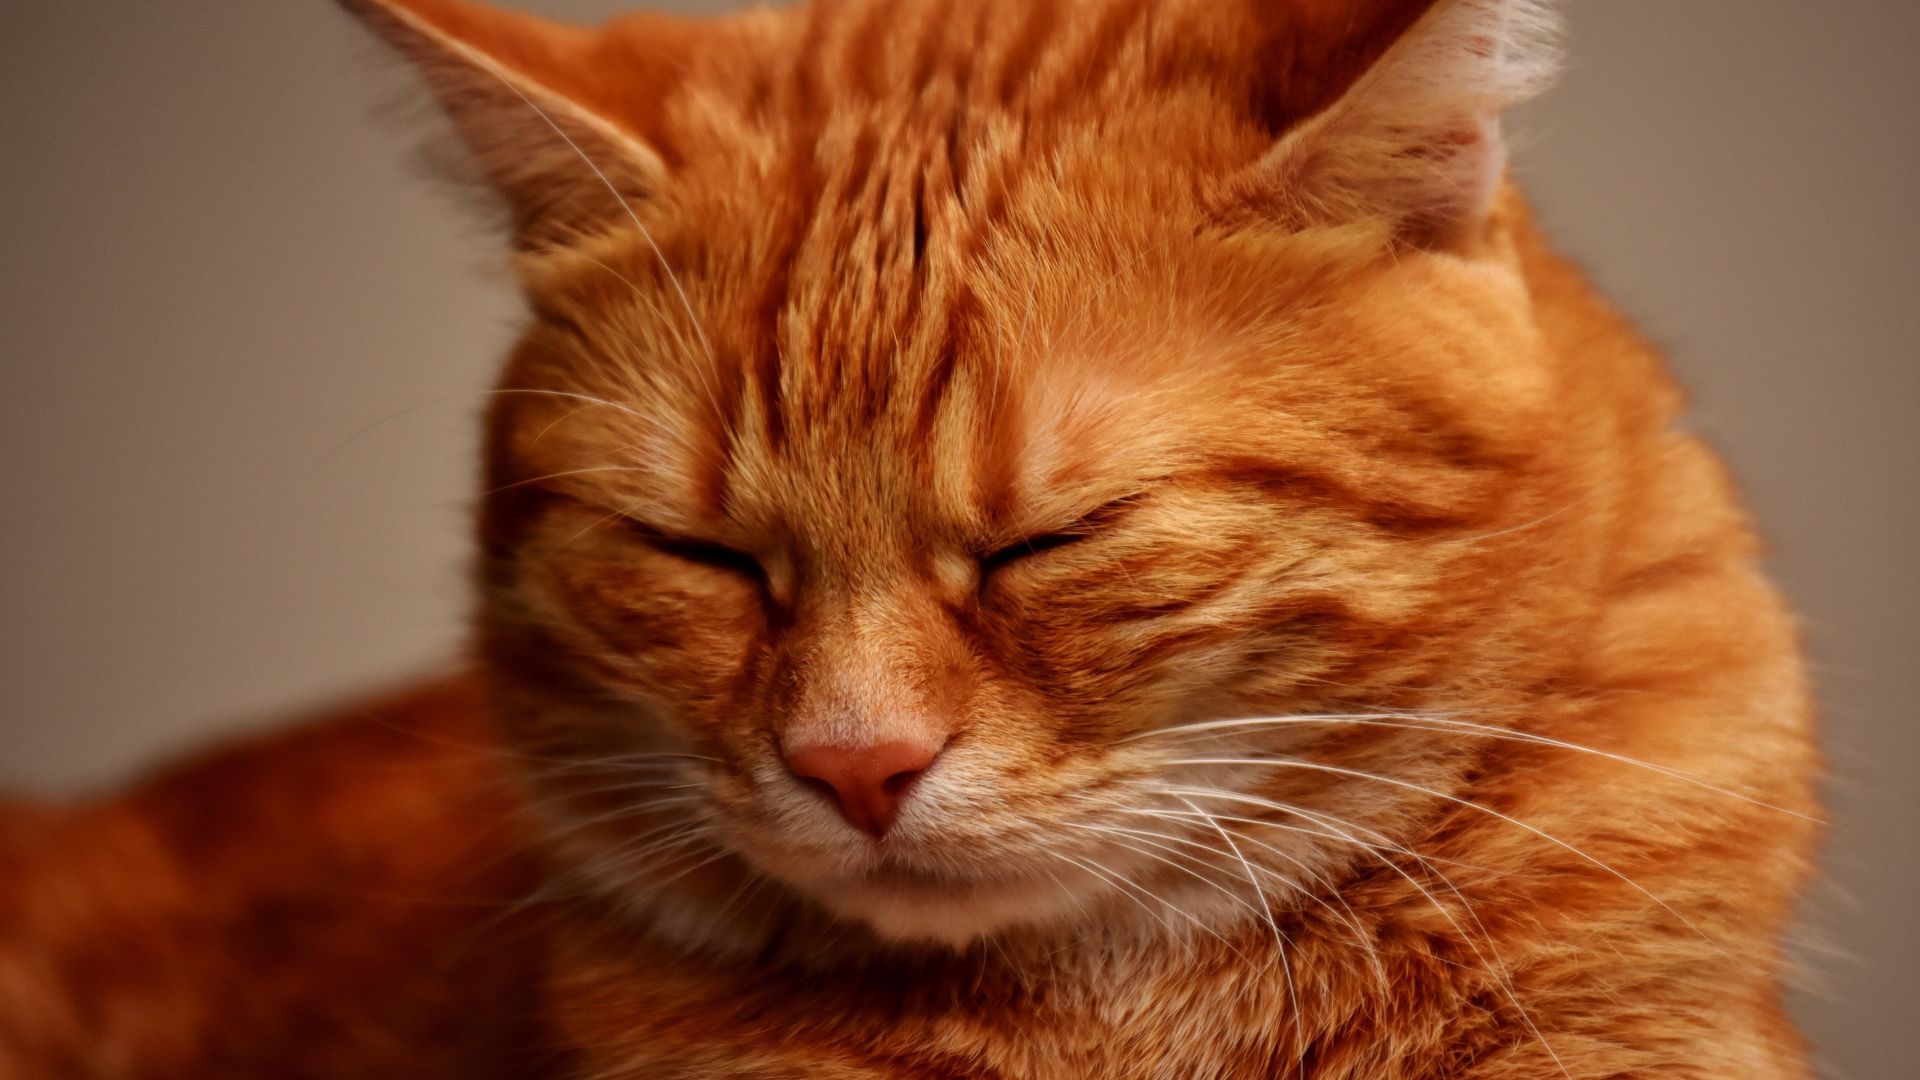 Muzzle, sleepy, orange cat wallpaper, HD image, picture, background, 1b1a82